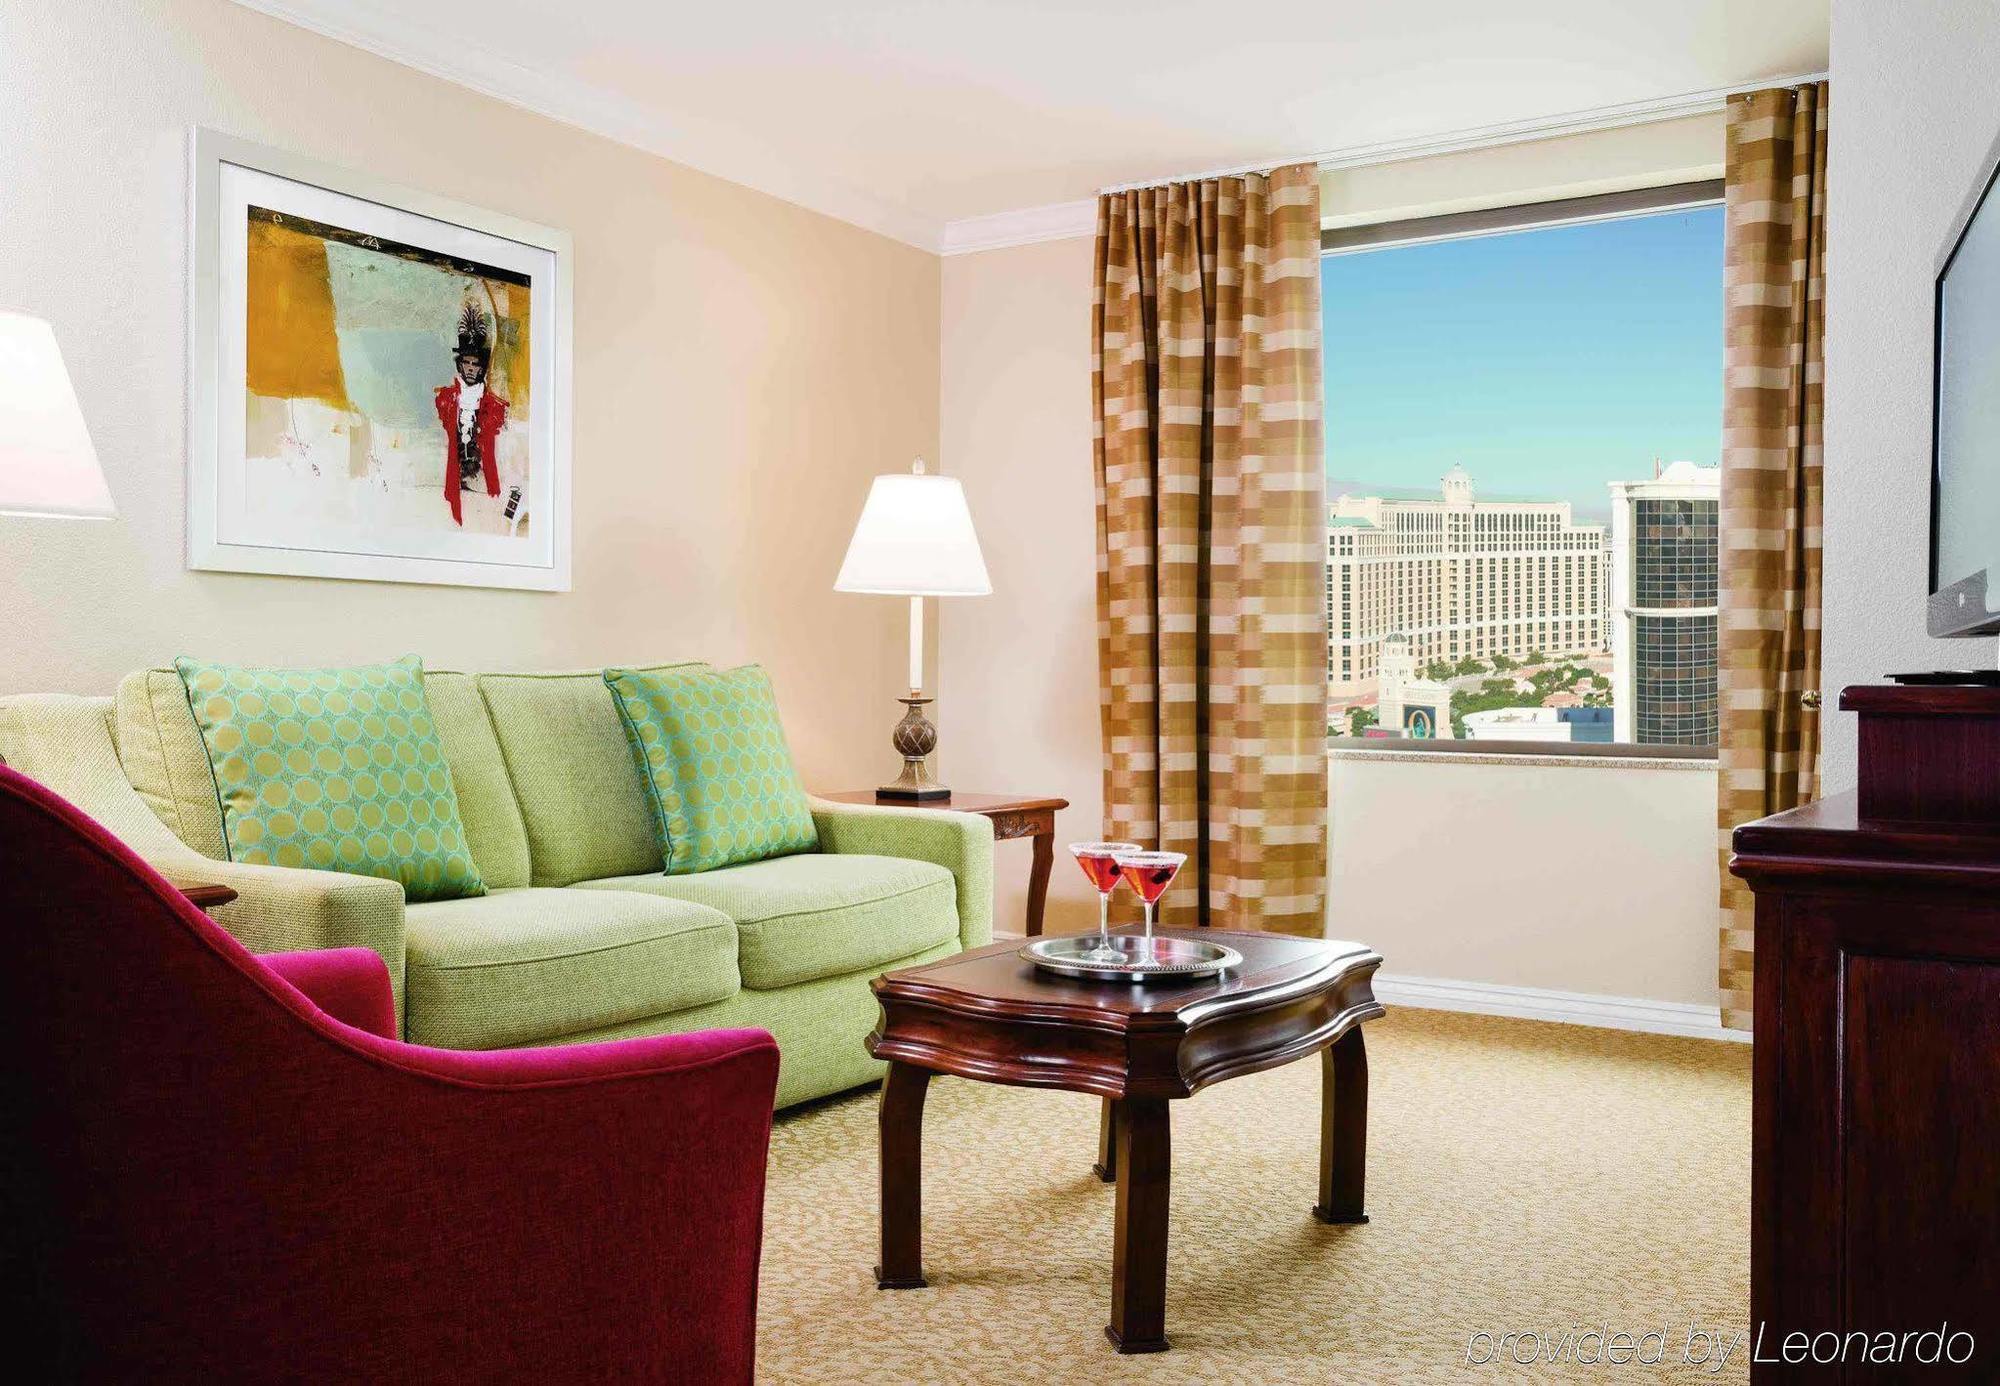 Suites at Marriott's Grand Chateau Las Vegas-No Resort Fee